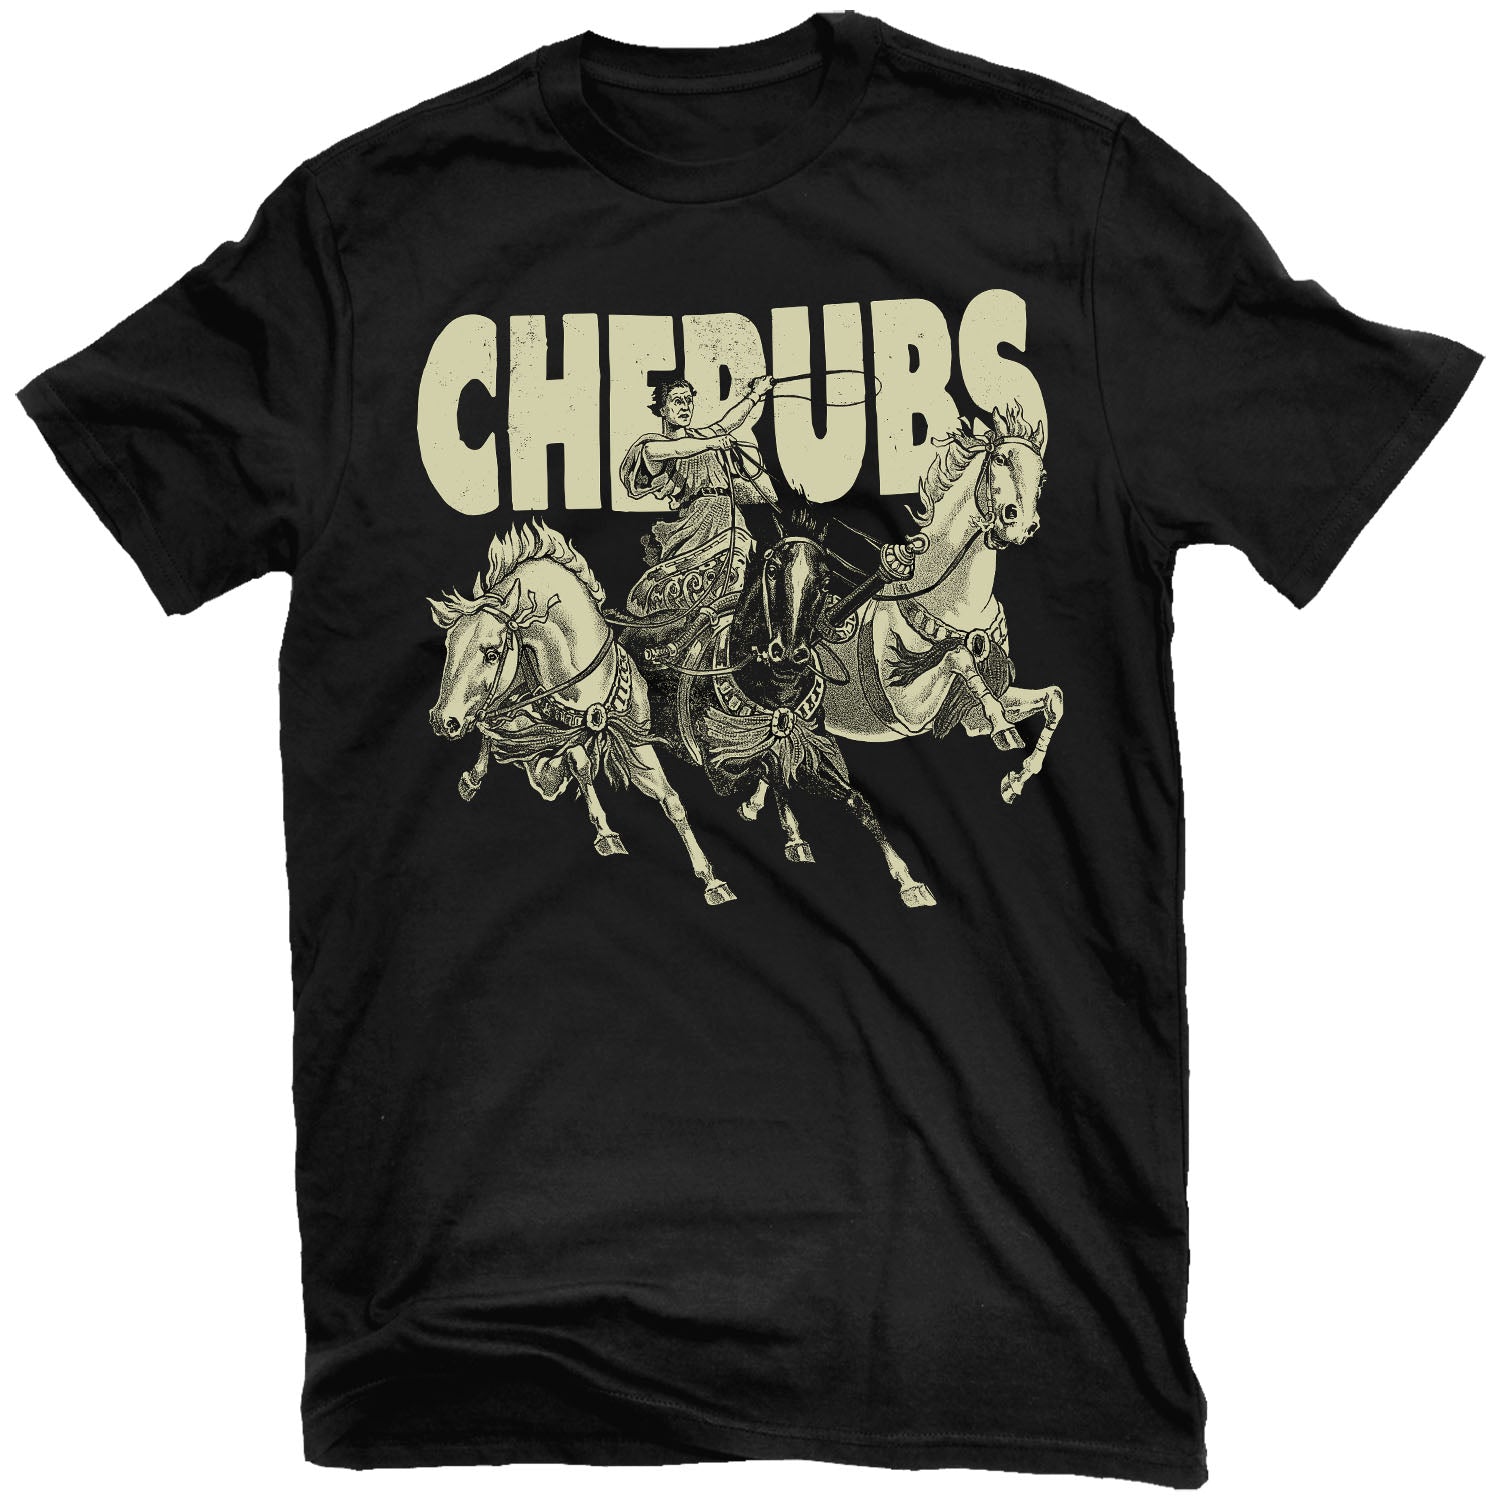 Cherubs "SLO BLO 4 FRNZ & SXY" T-Shirt